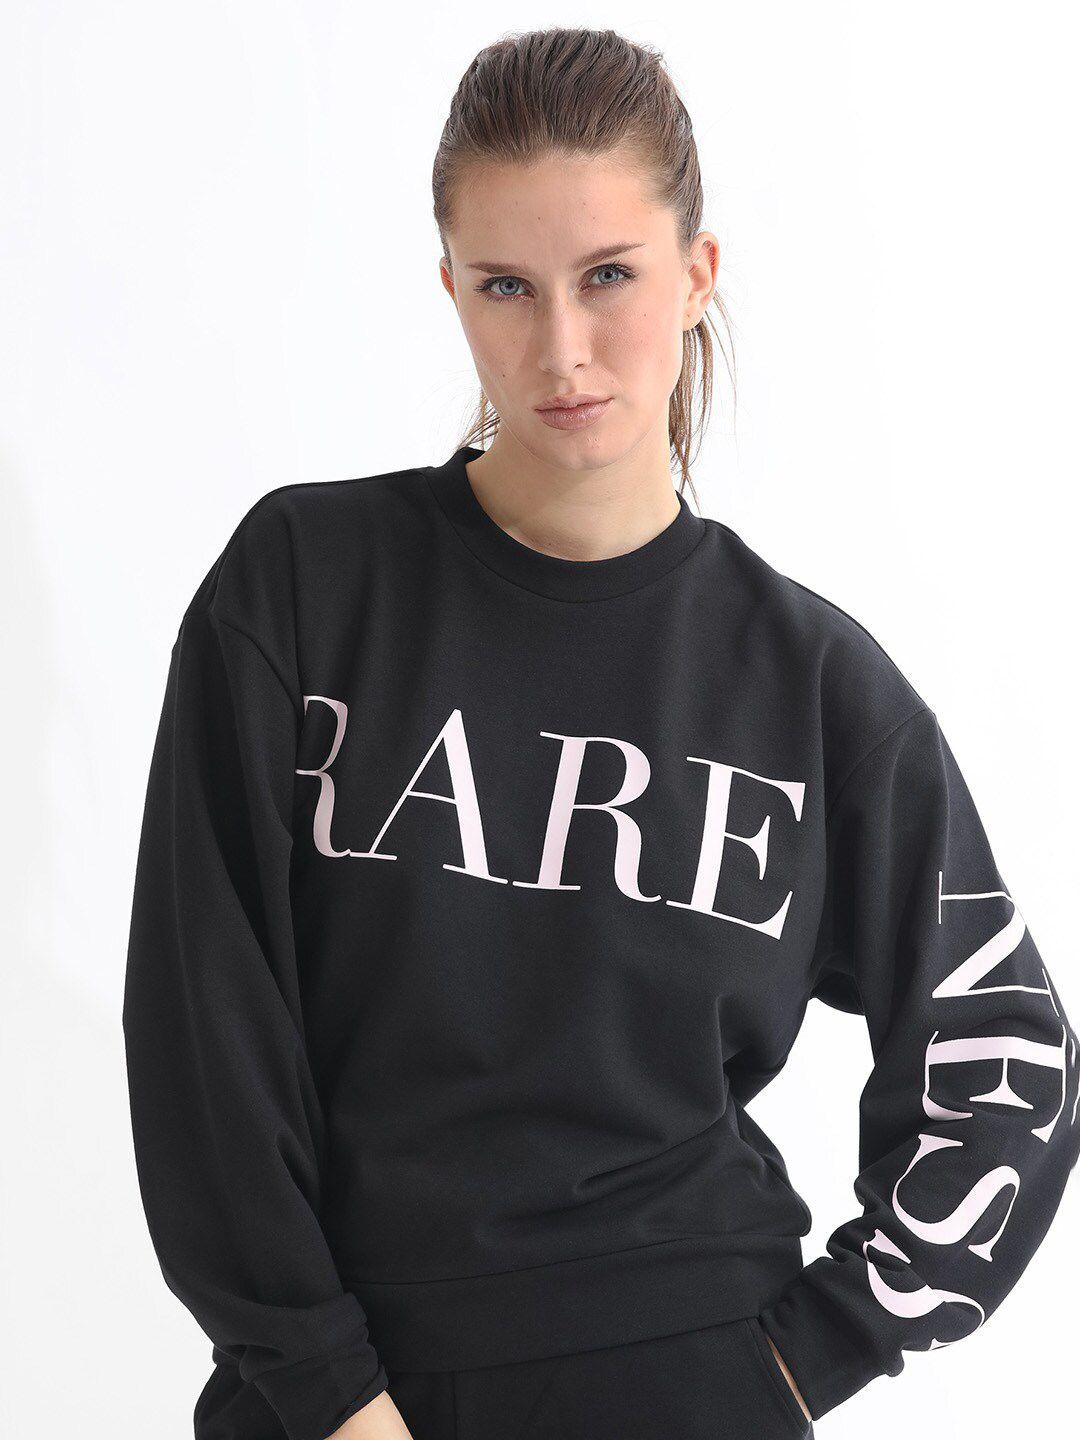 rareism typographic printed cotton sweatshirt